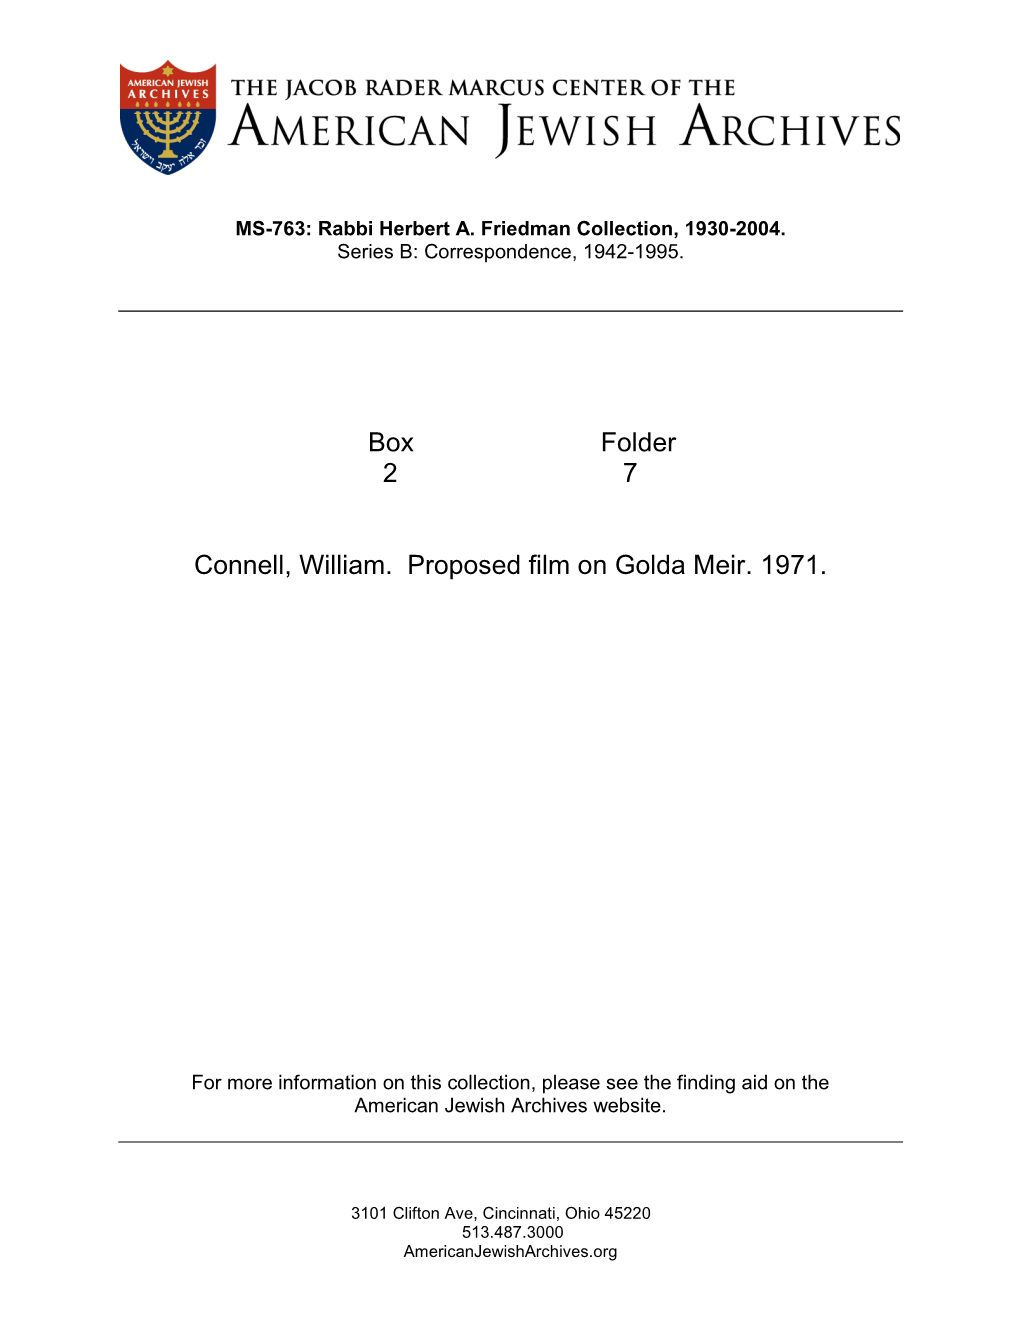 Box Folder 2 7 Connell, William. Proposed Film on Golda Meir. 1971